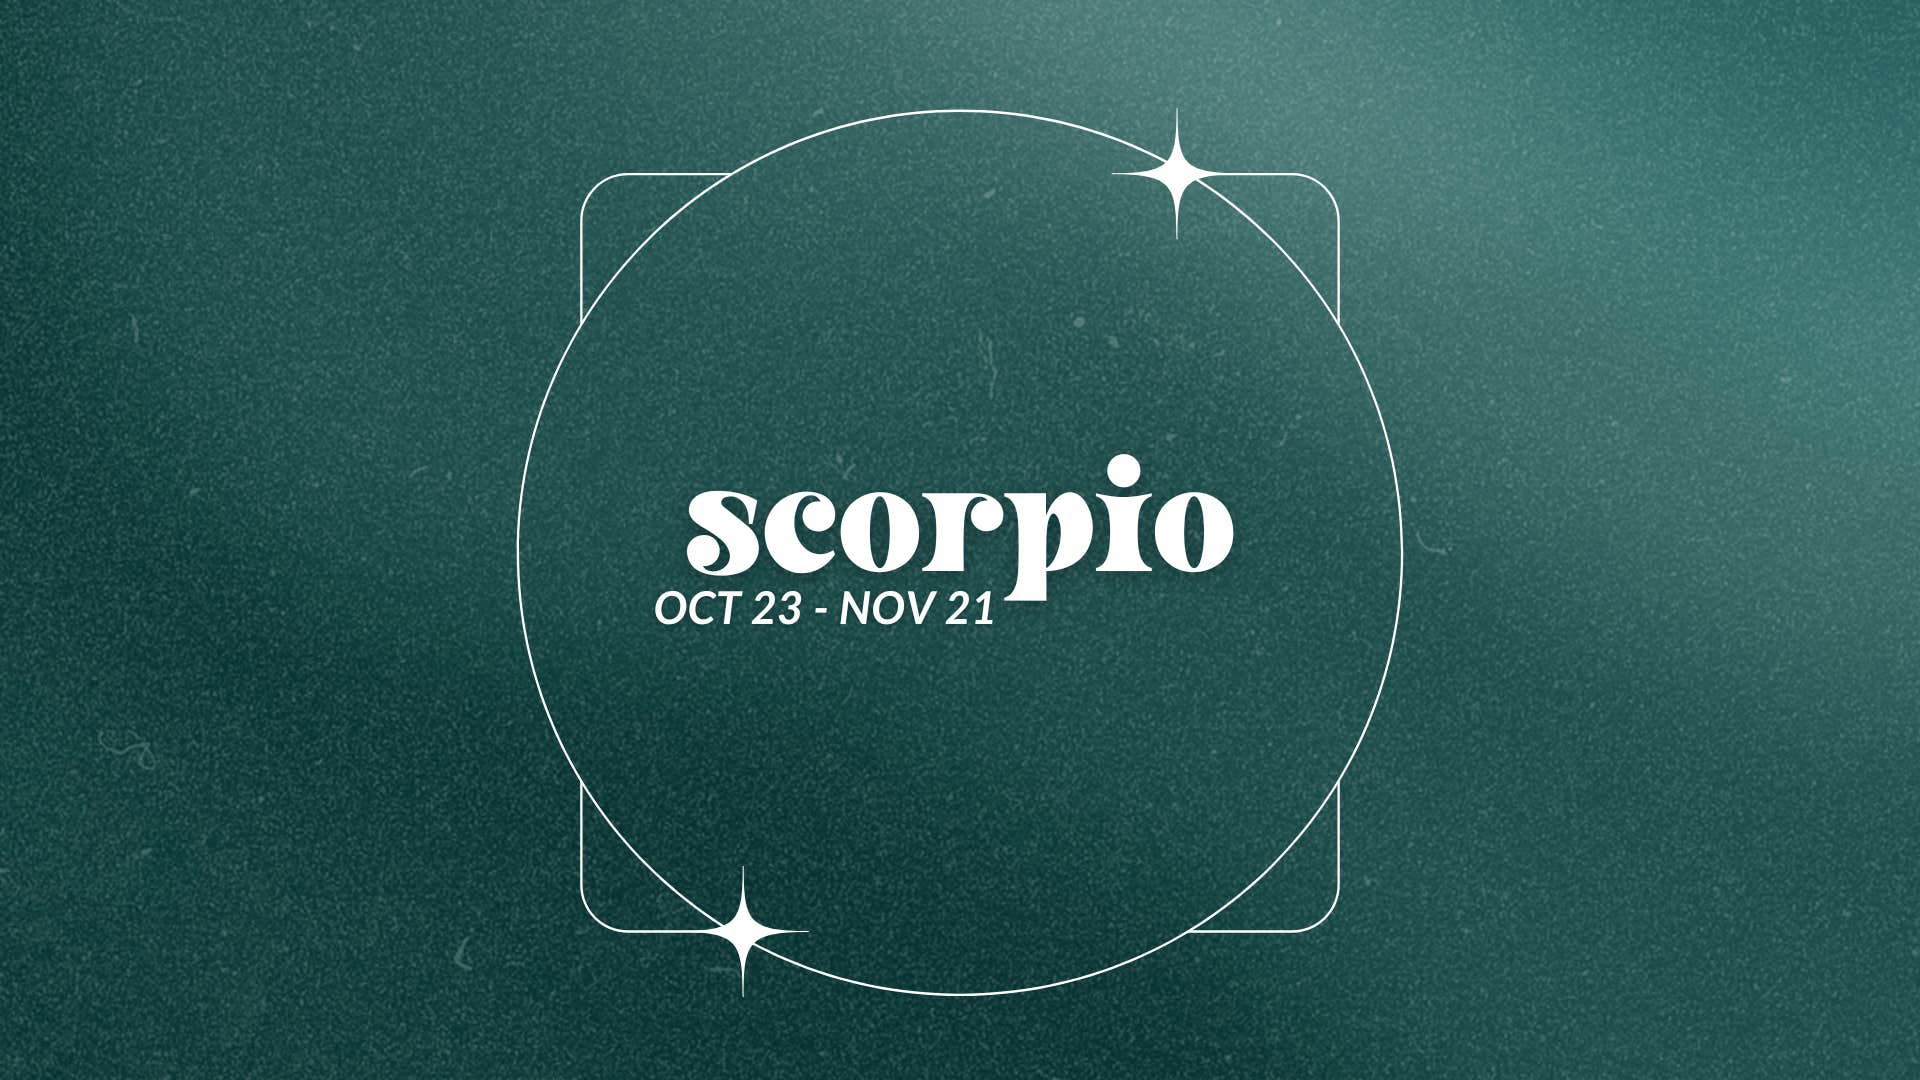 what puts scorpio in a good mood